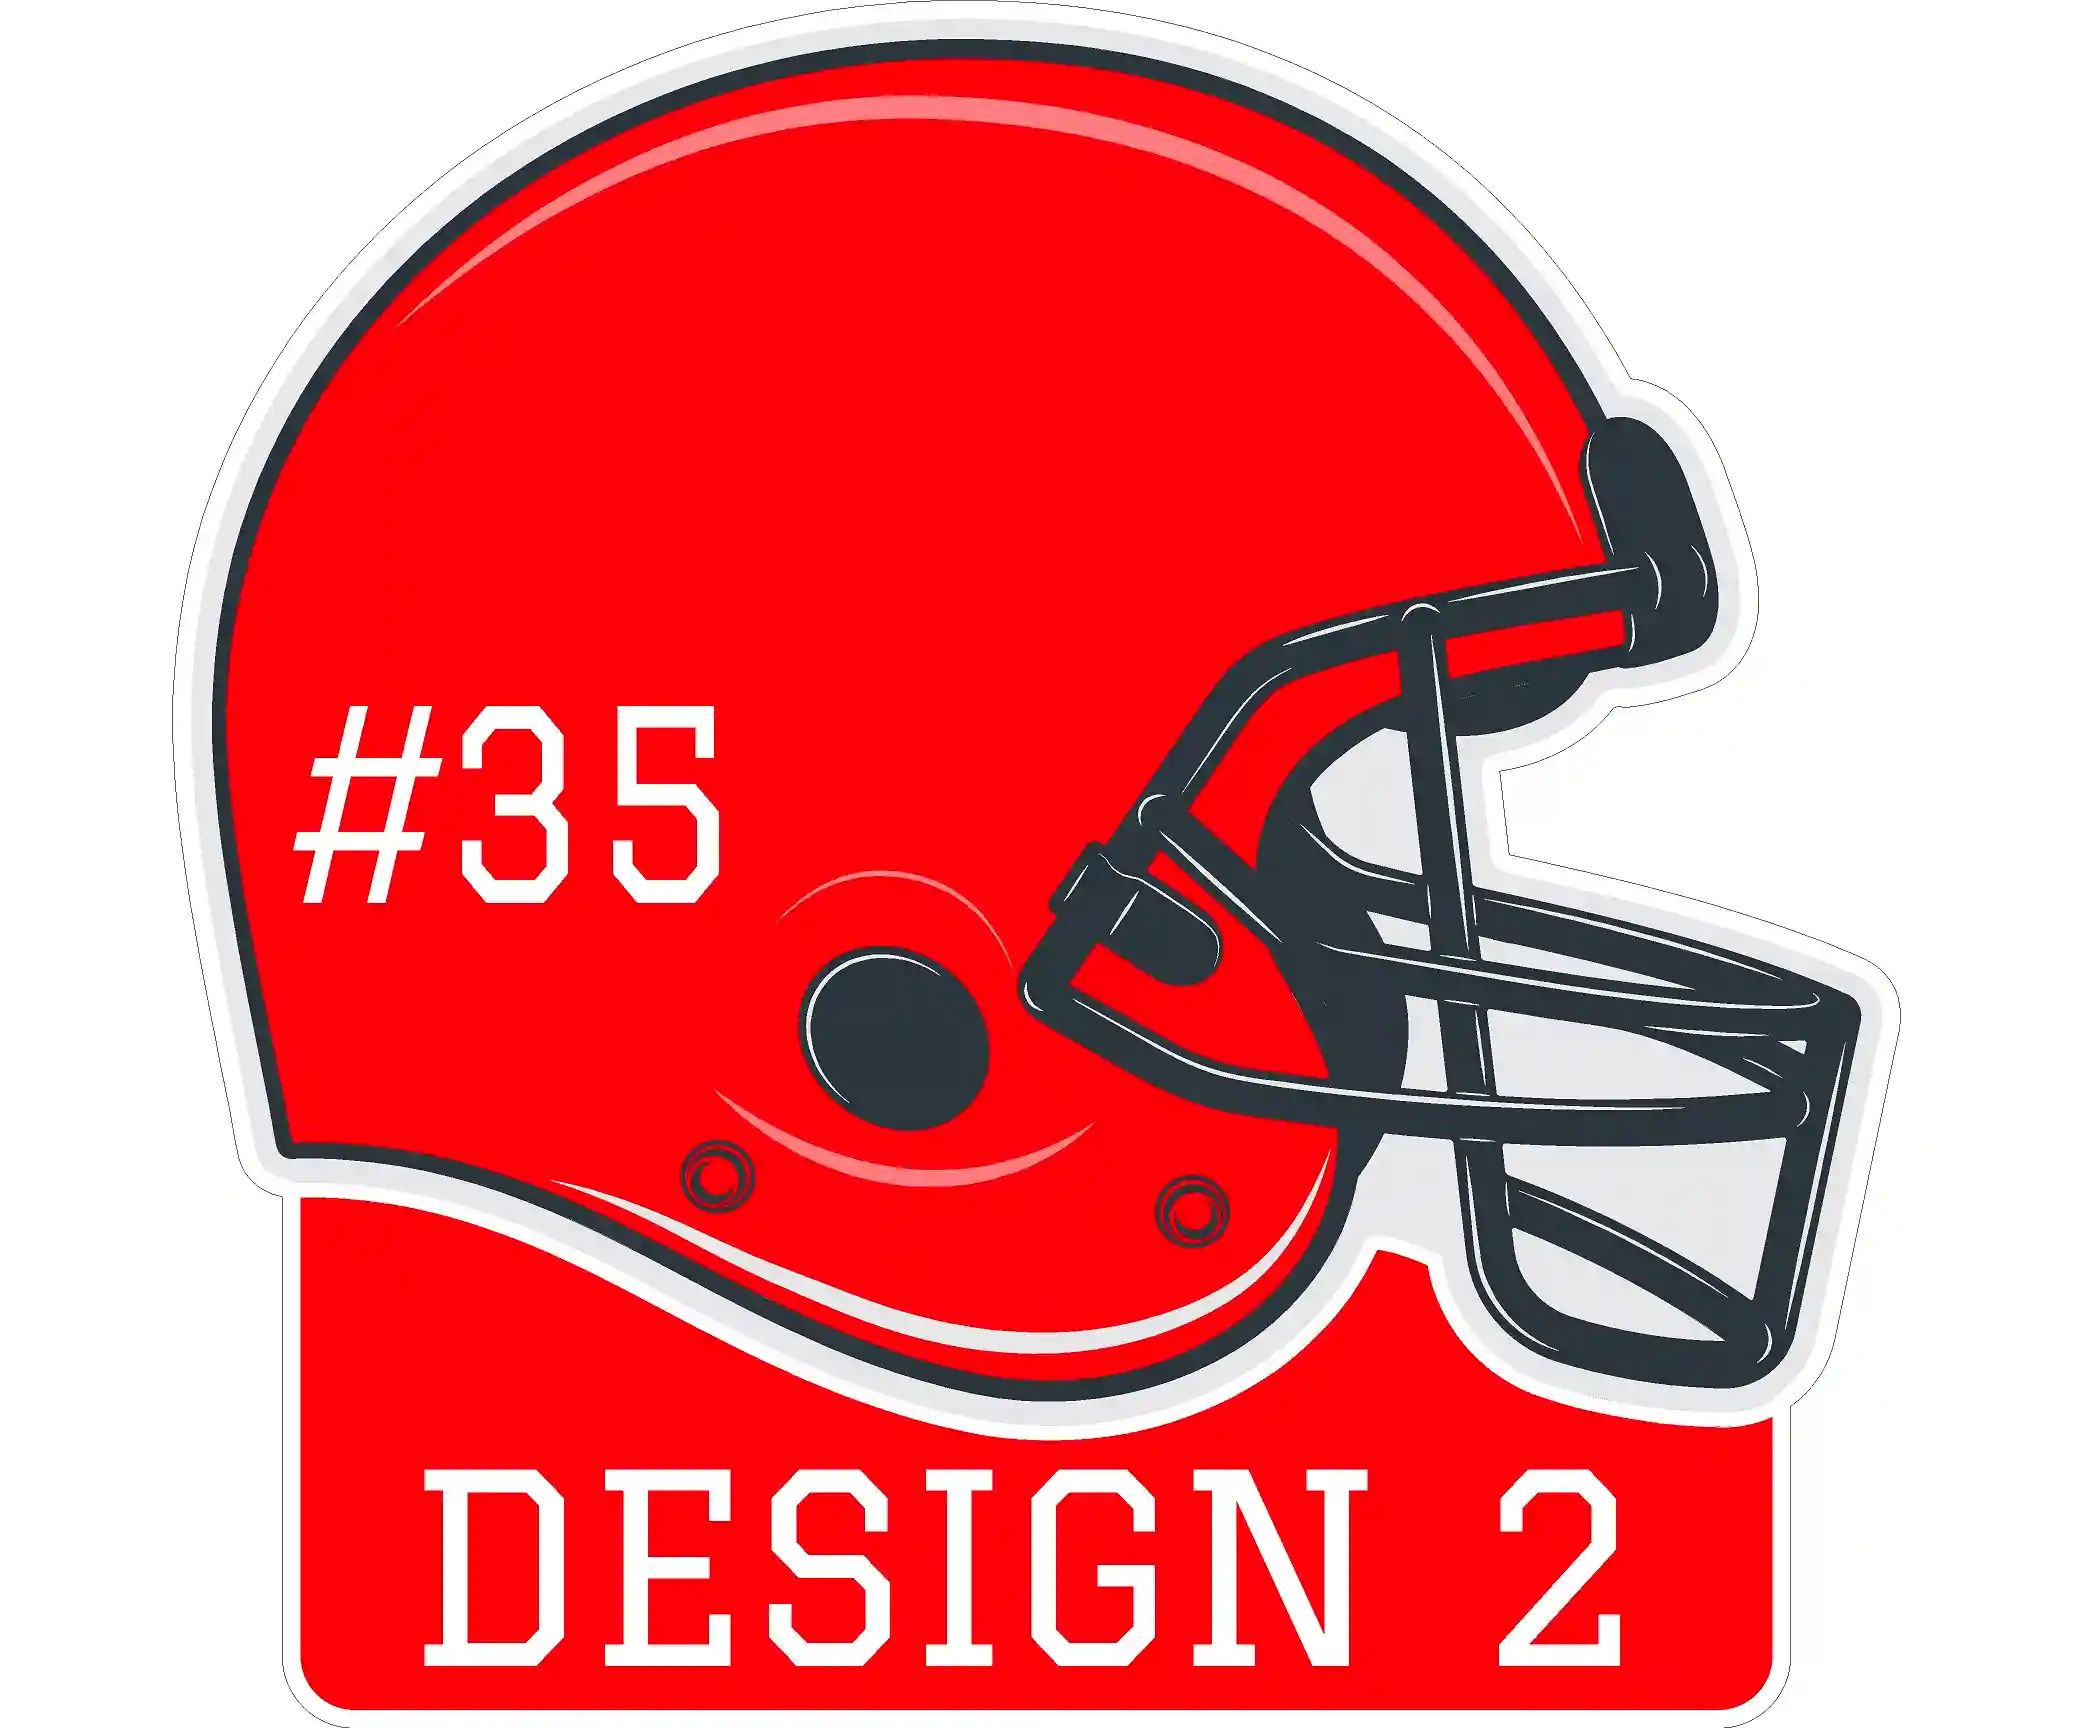 Design Your Own Football Helmet with banner below